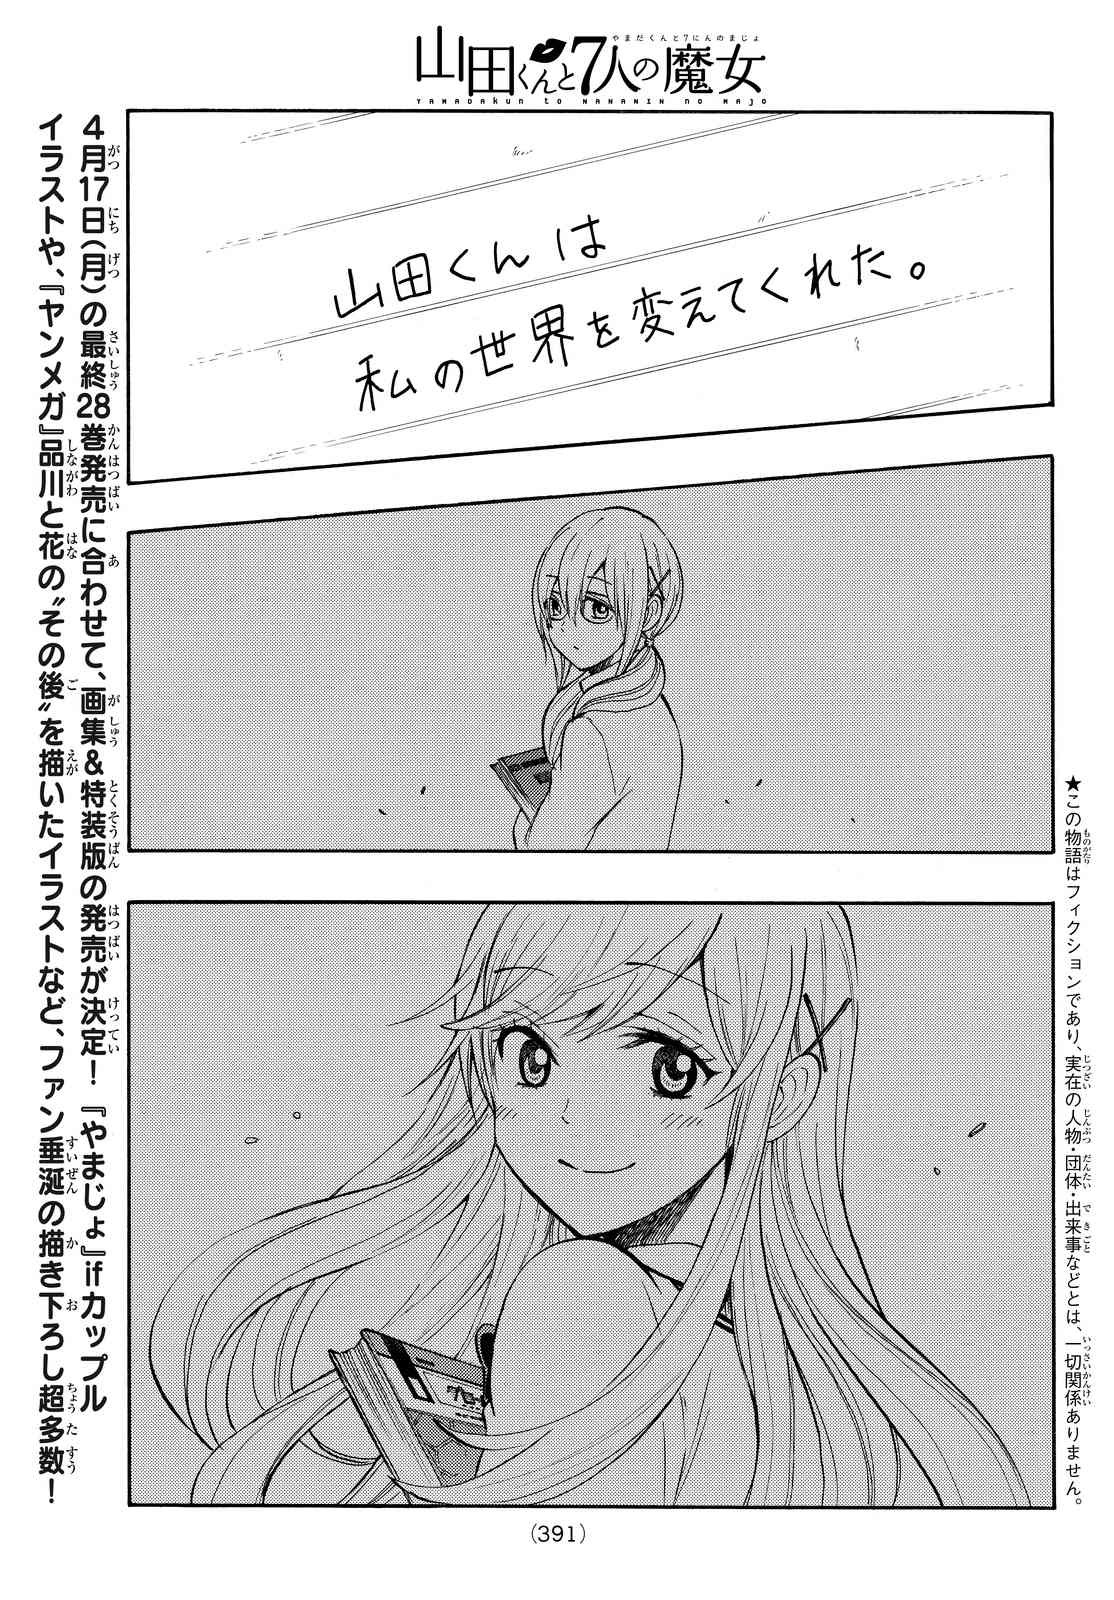 Yamada-kun to 7-nin no Majo - Chapter 240 - Page 3